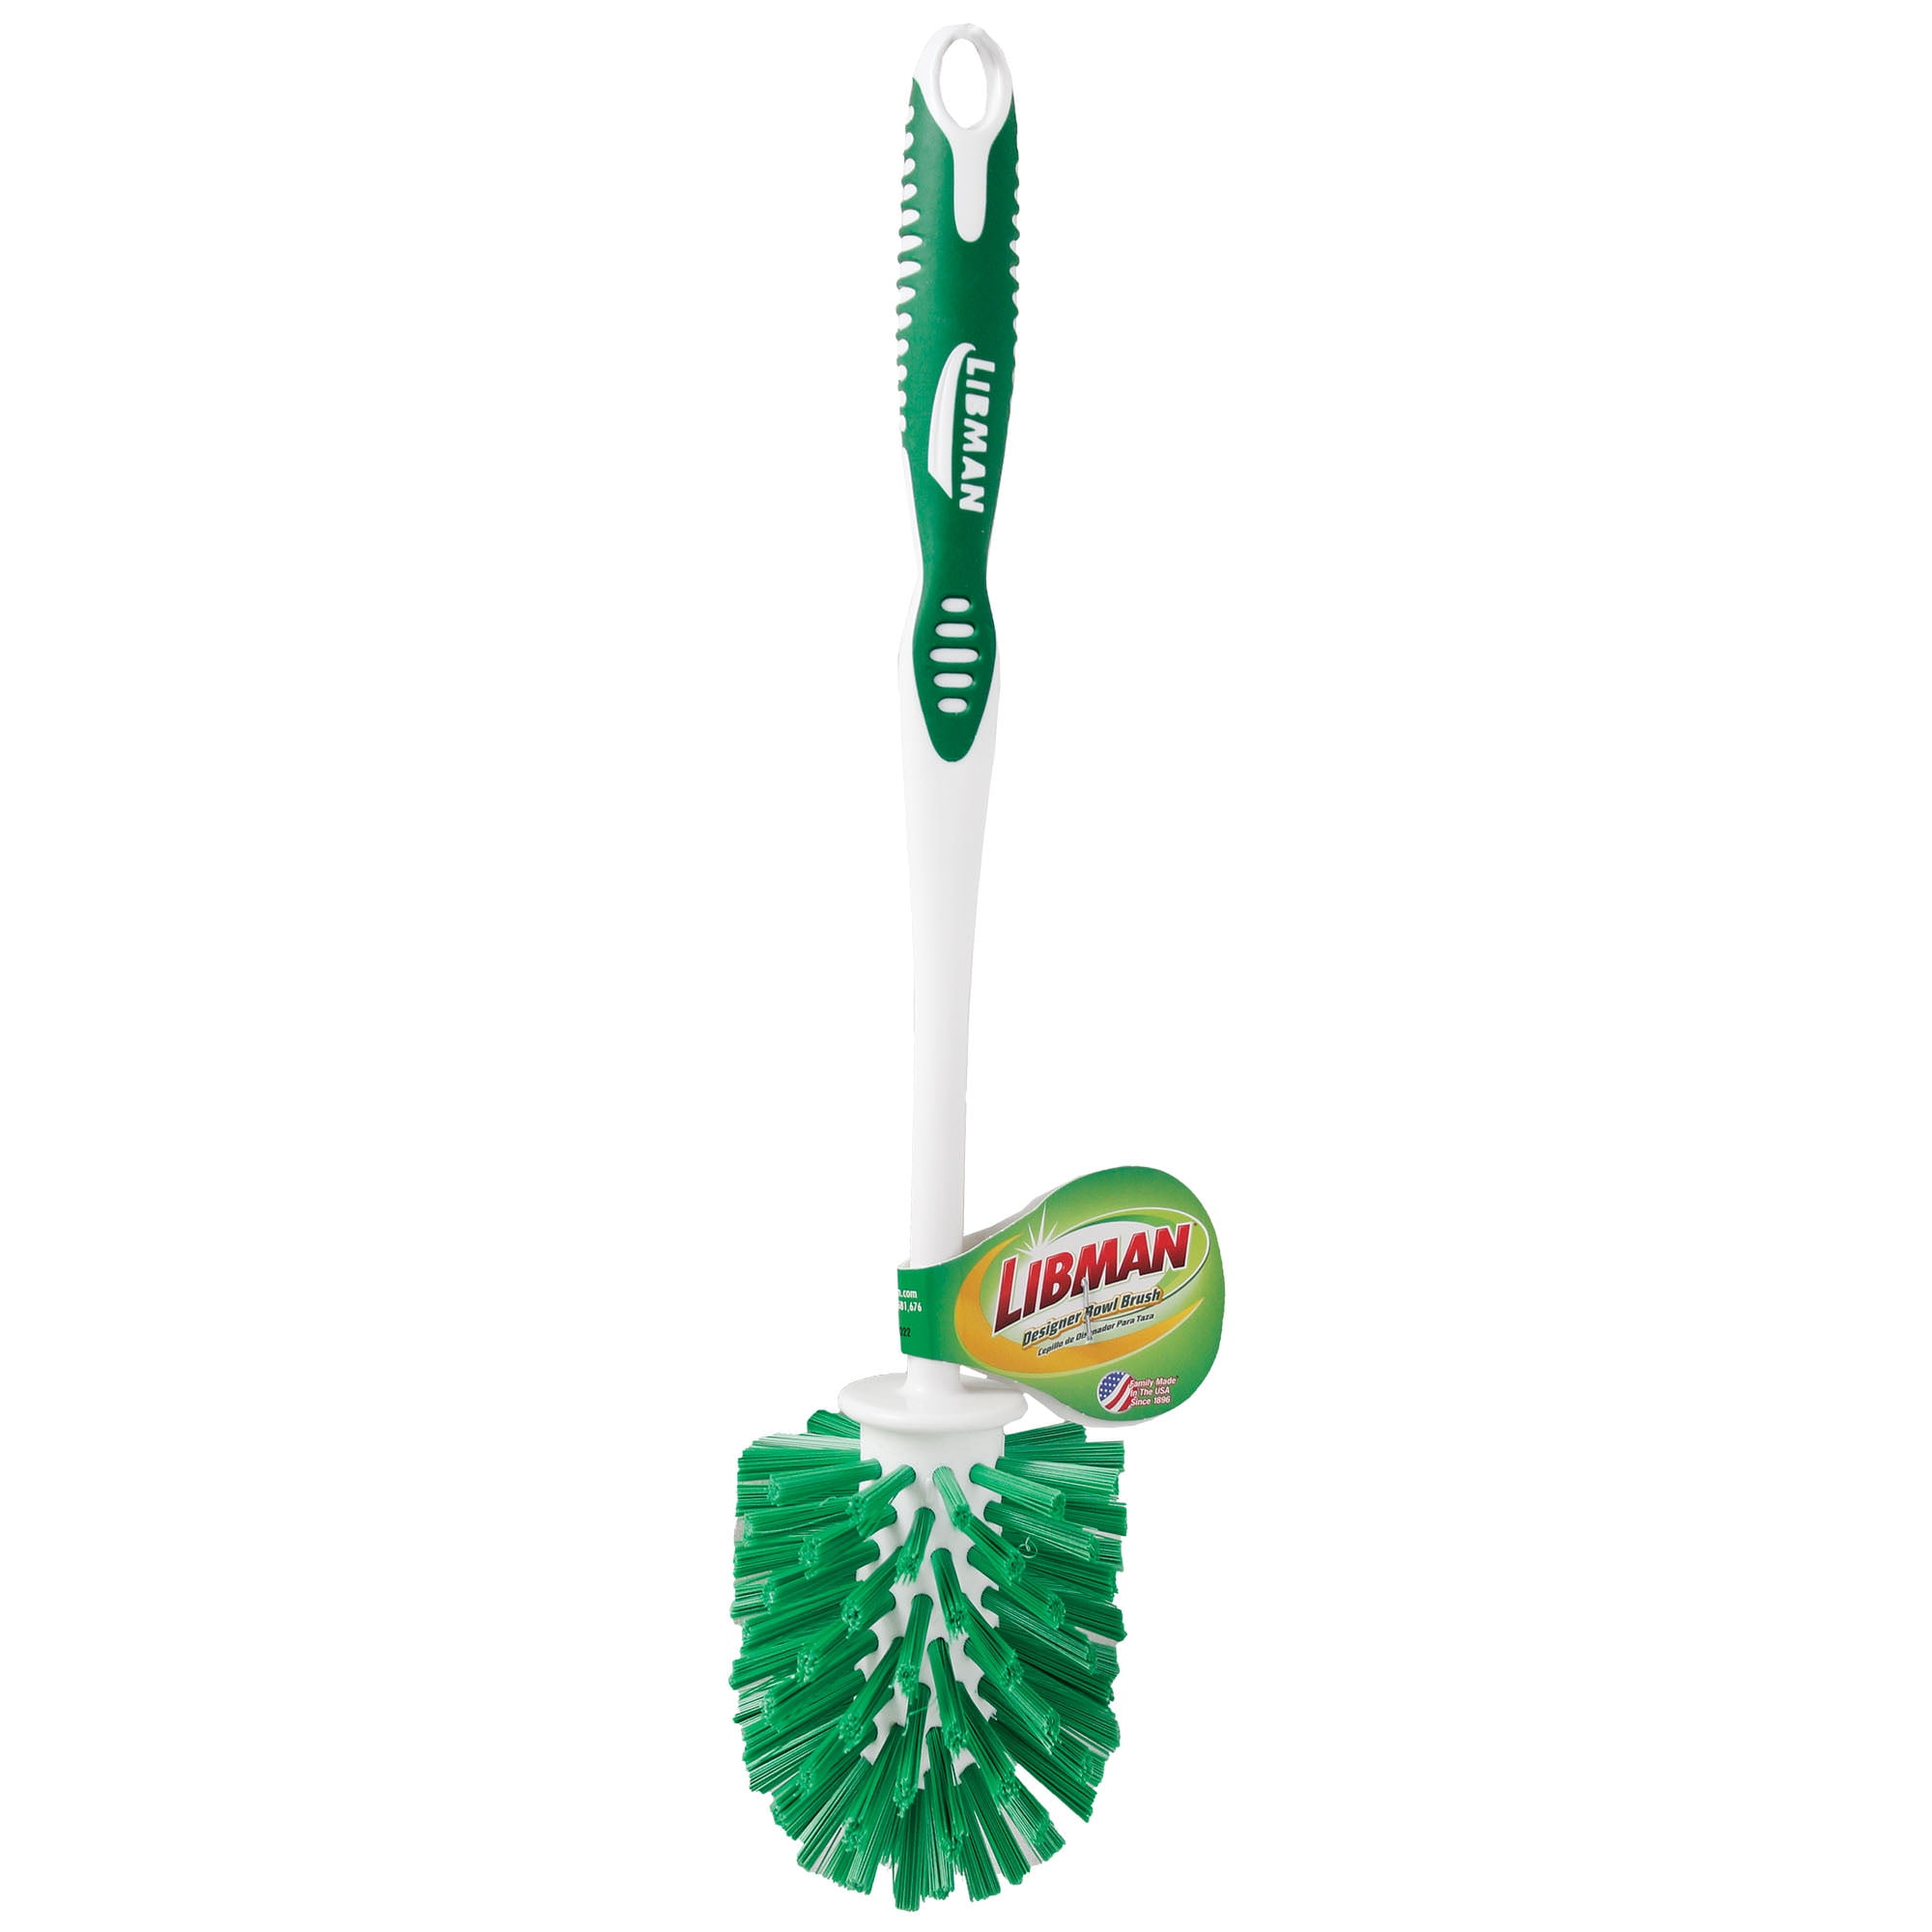 Libman® All-Purpose Dish Brush - White/Green, 1 ct - Kroger